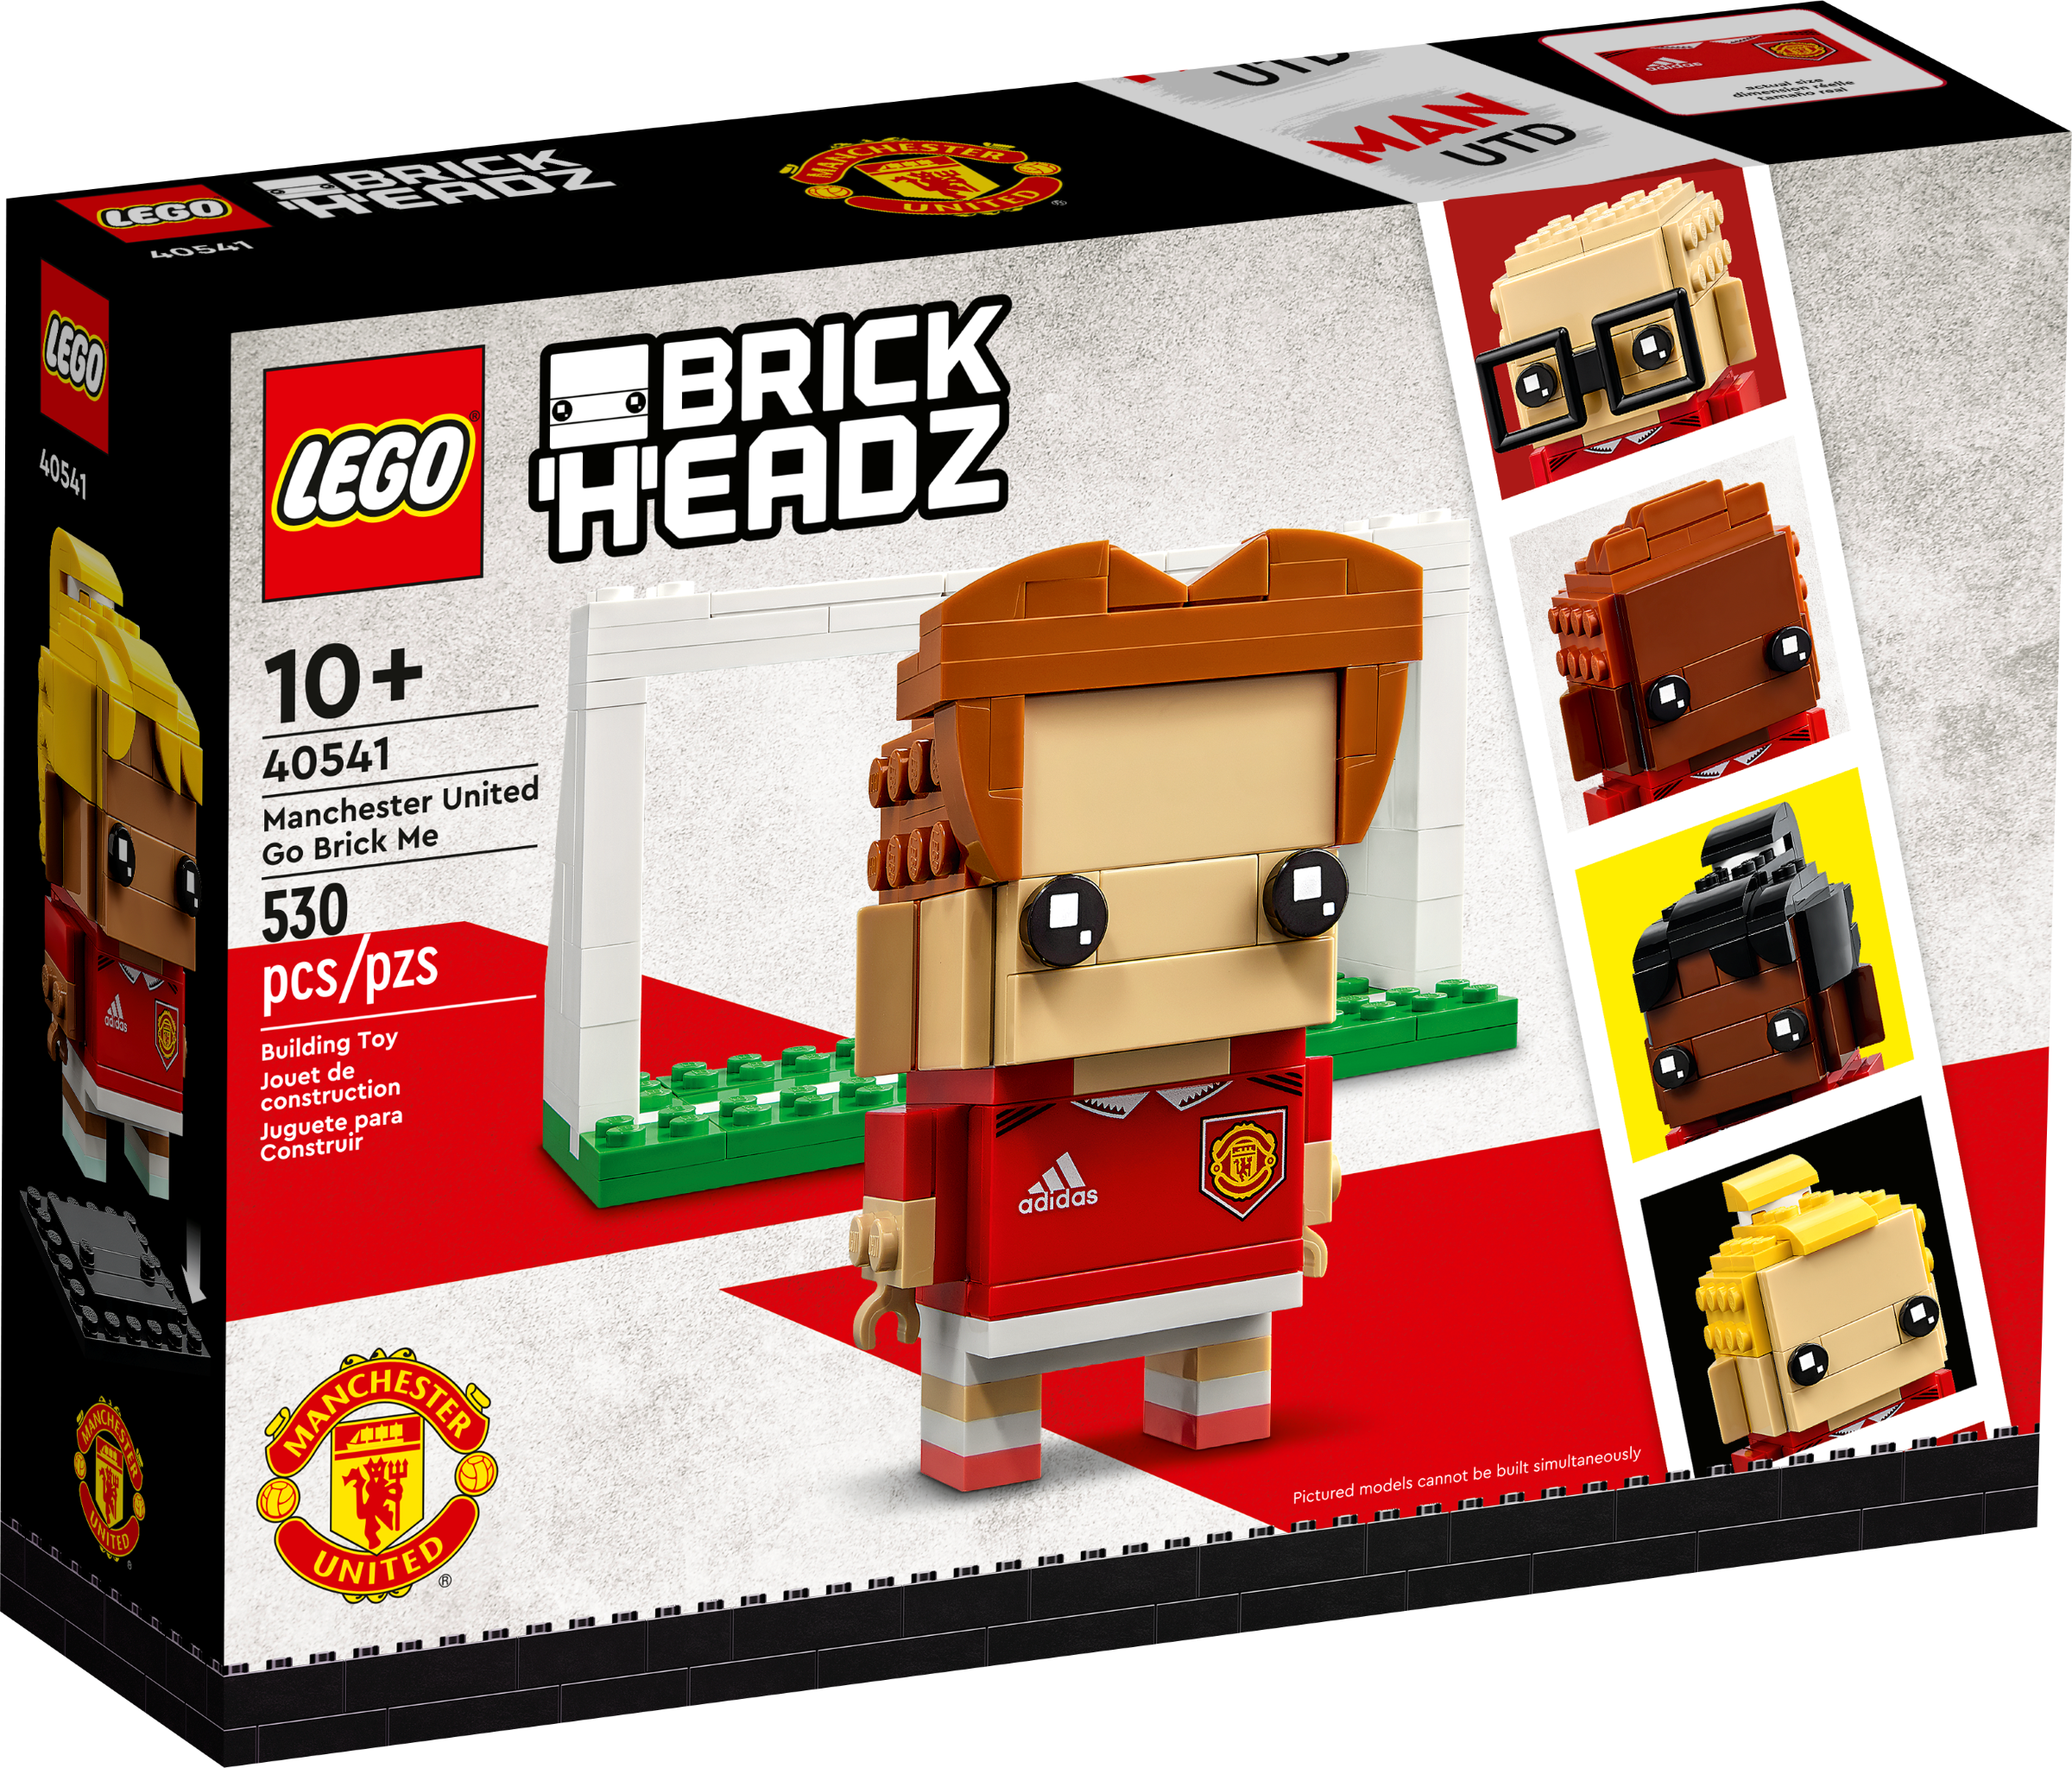 Go Brick Me | BrickHeadz | Buy online at the Official LEGO® Shop US